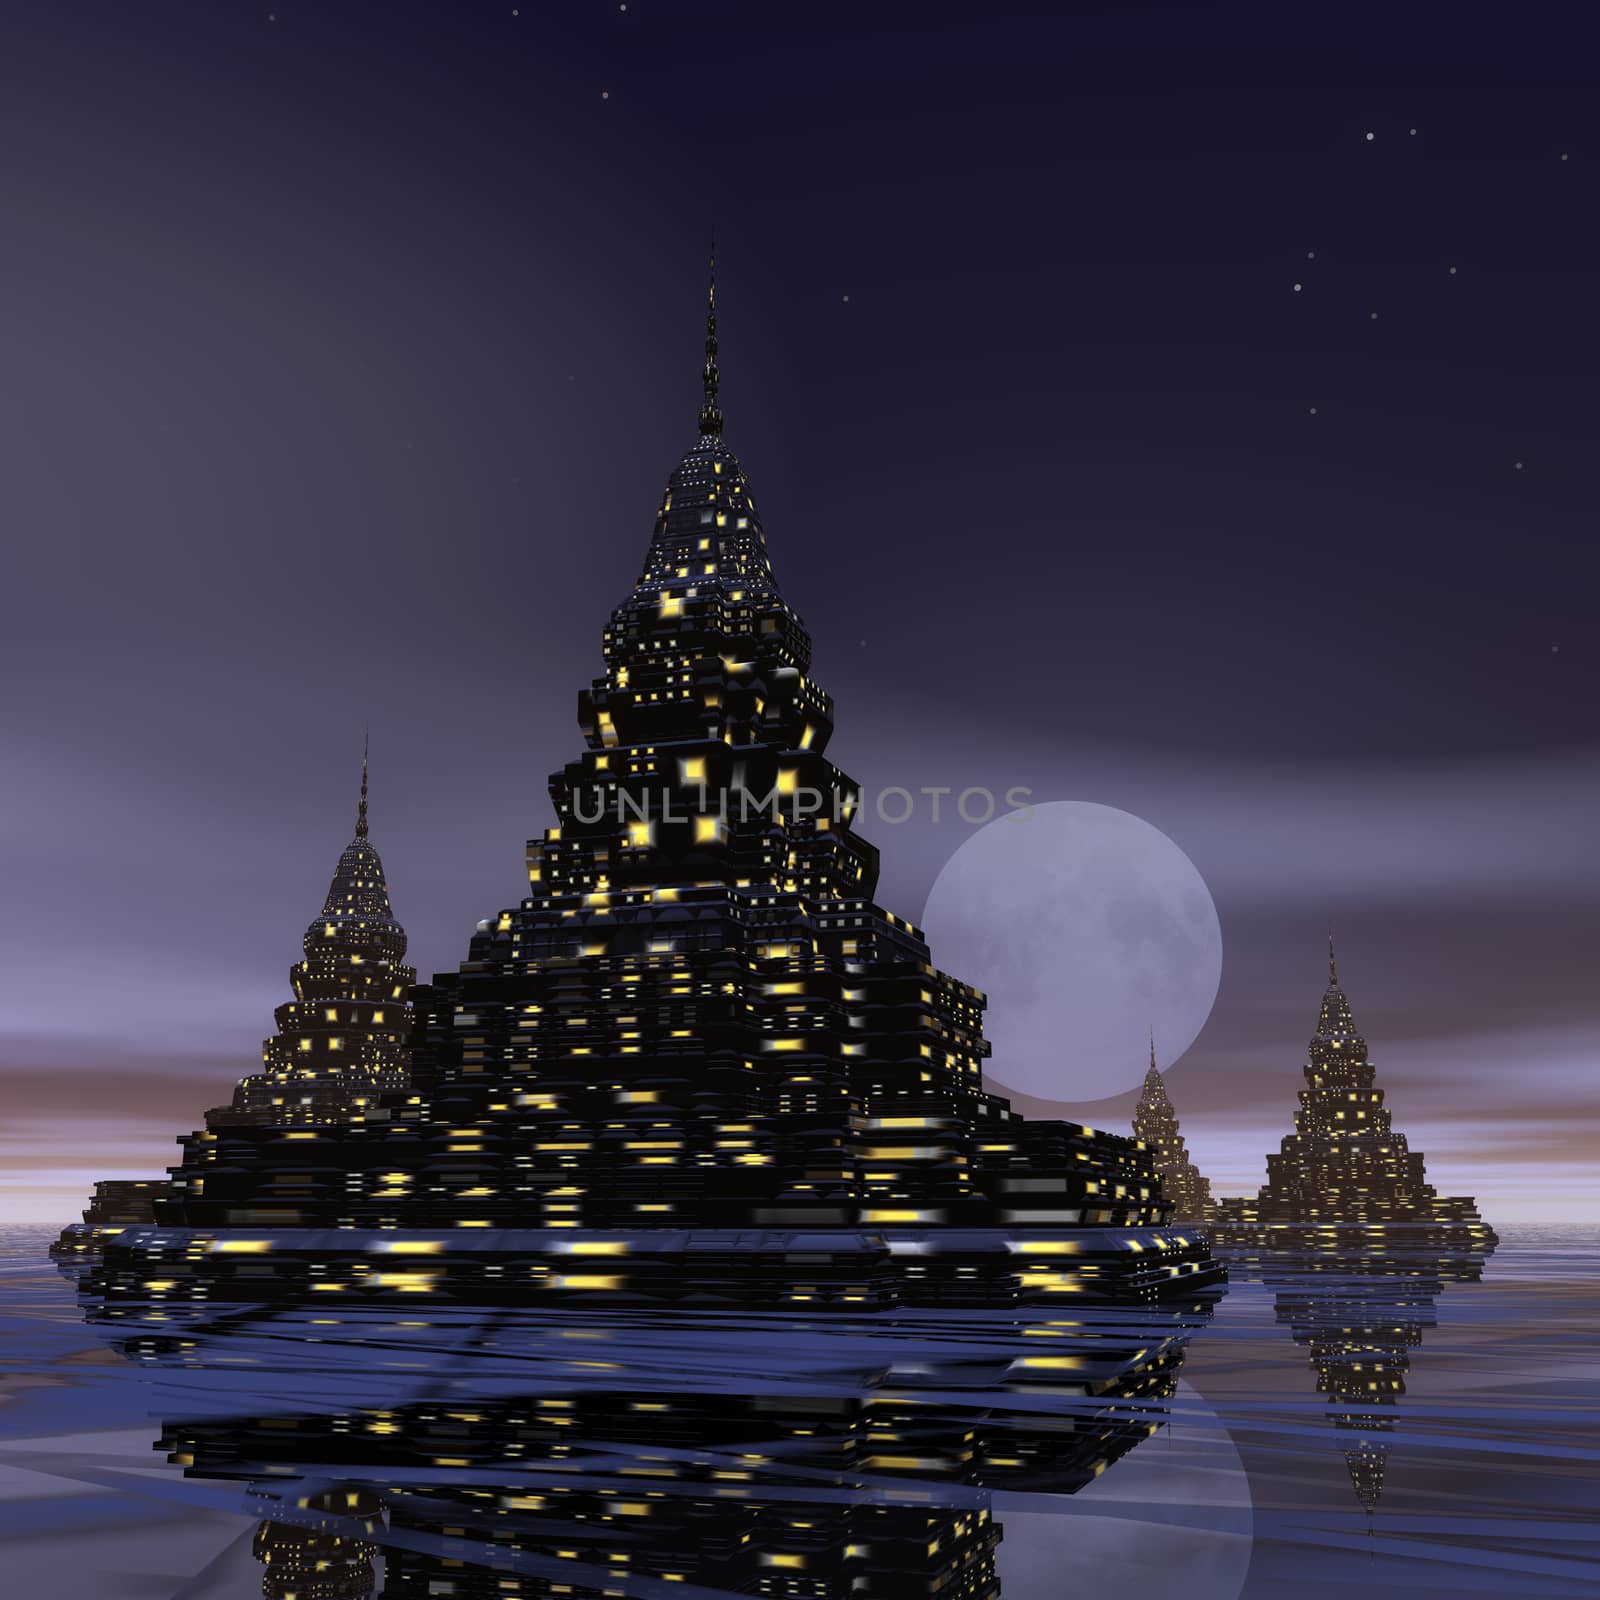 Digital Illustration of a surreal Pagoda